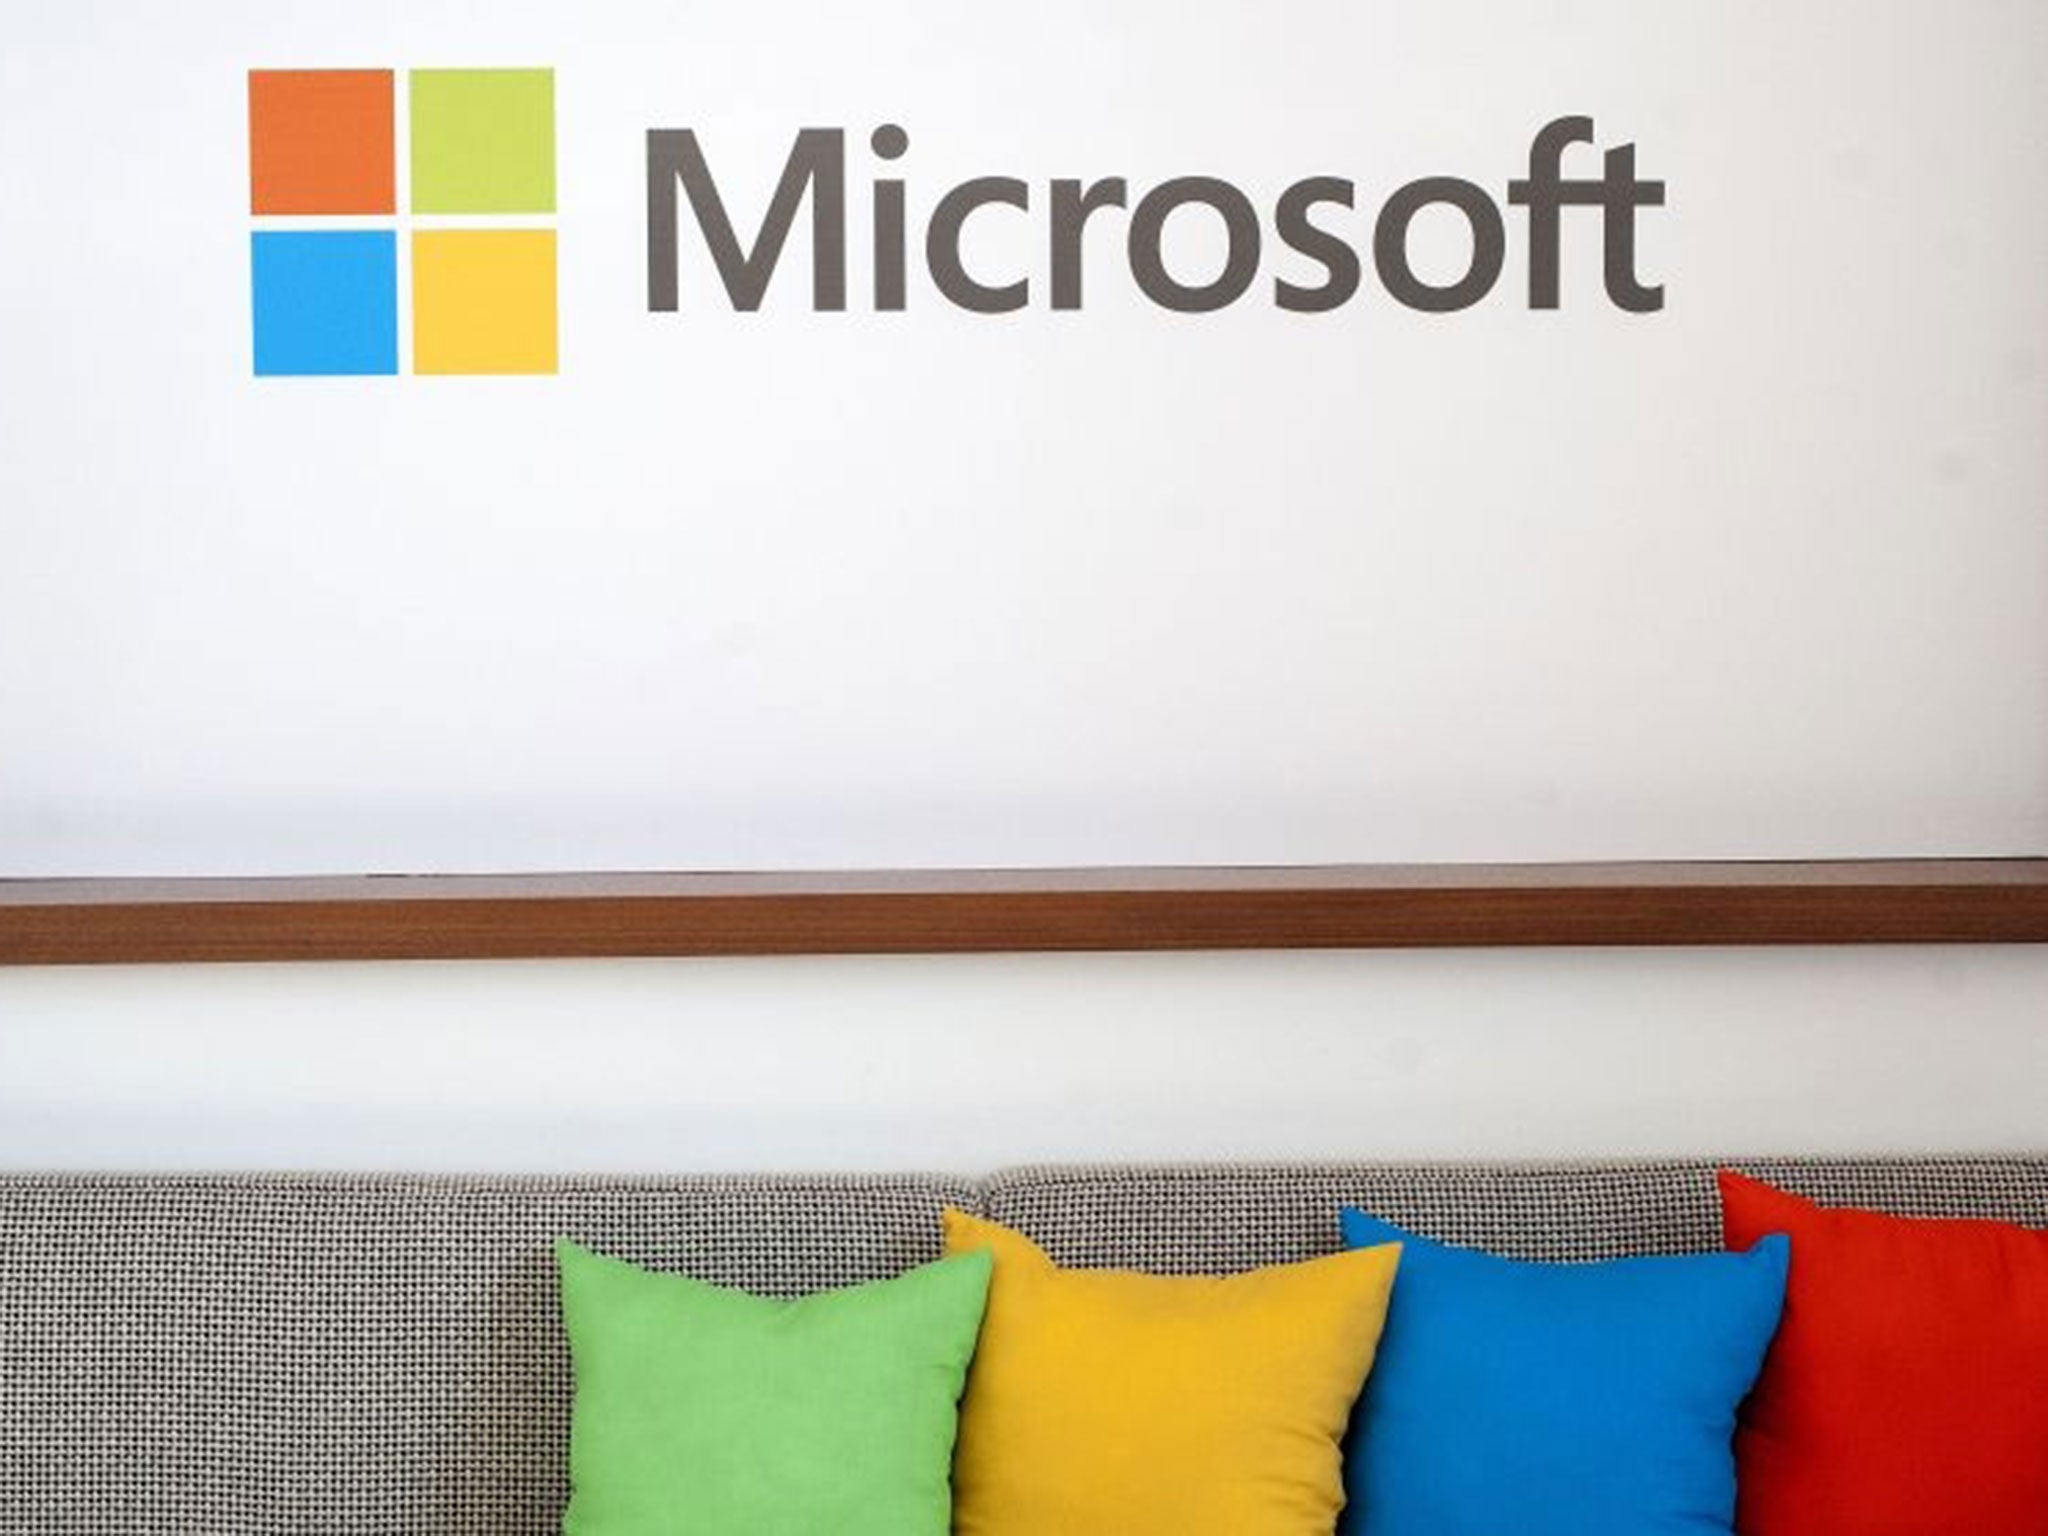 Microsoft has unveiled Windows 10